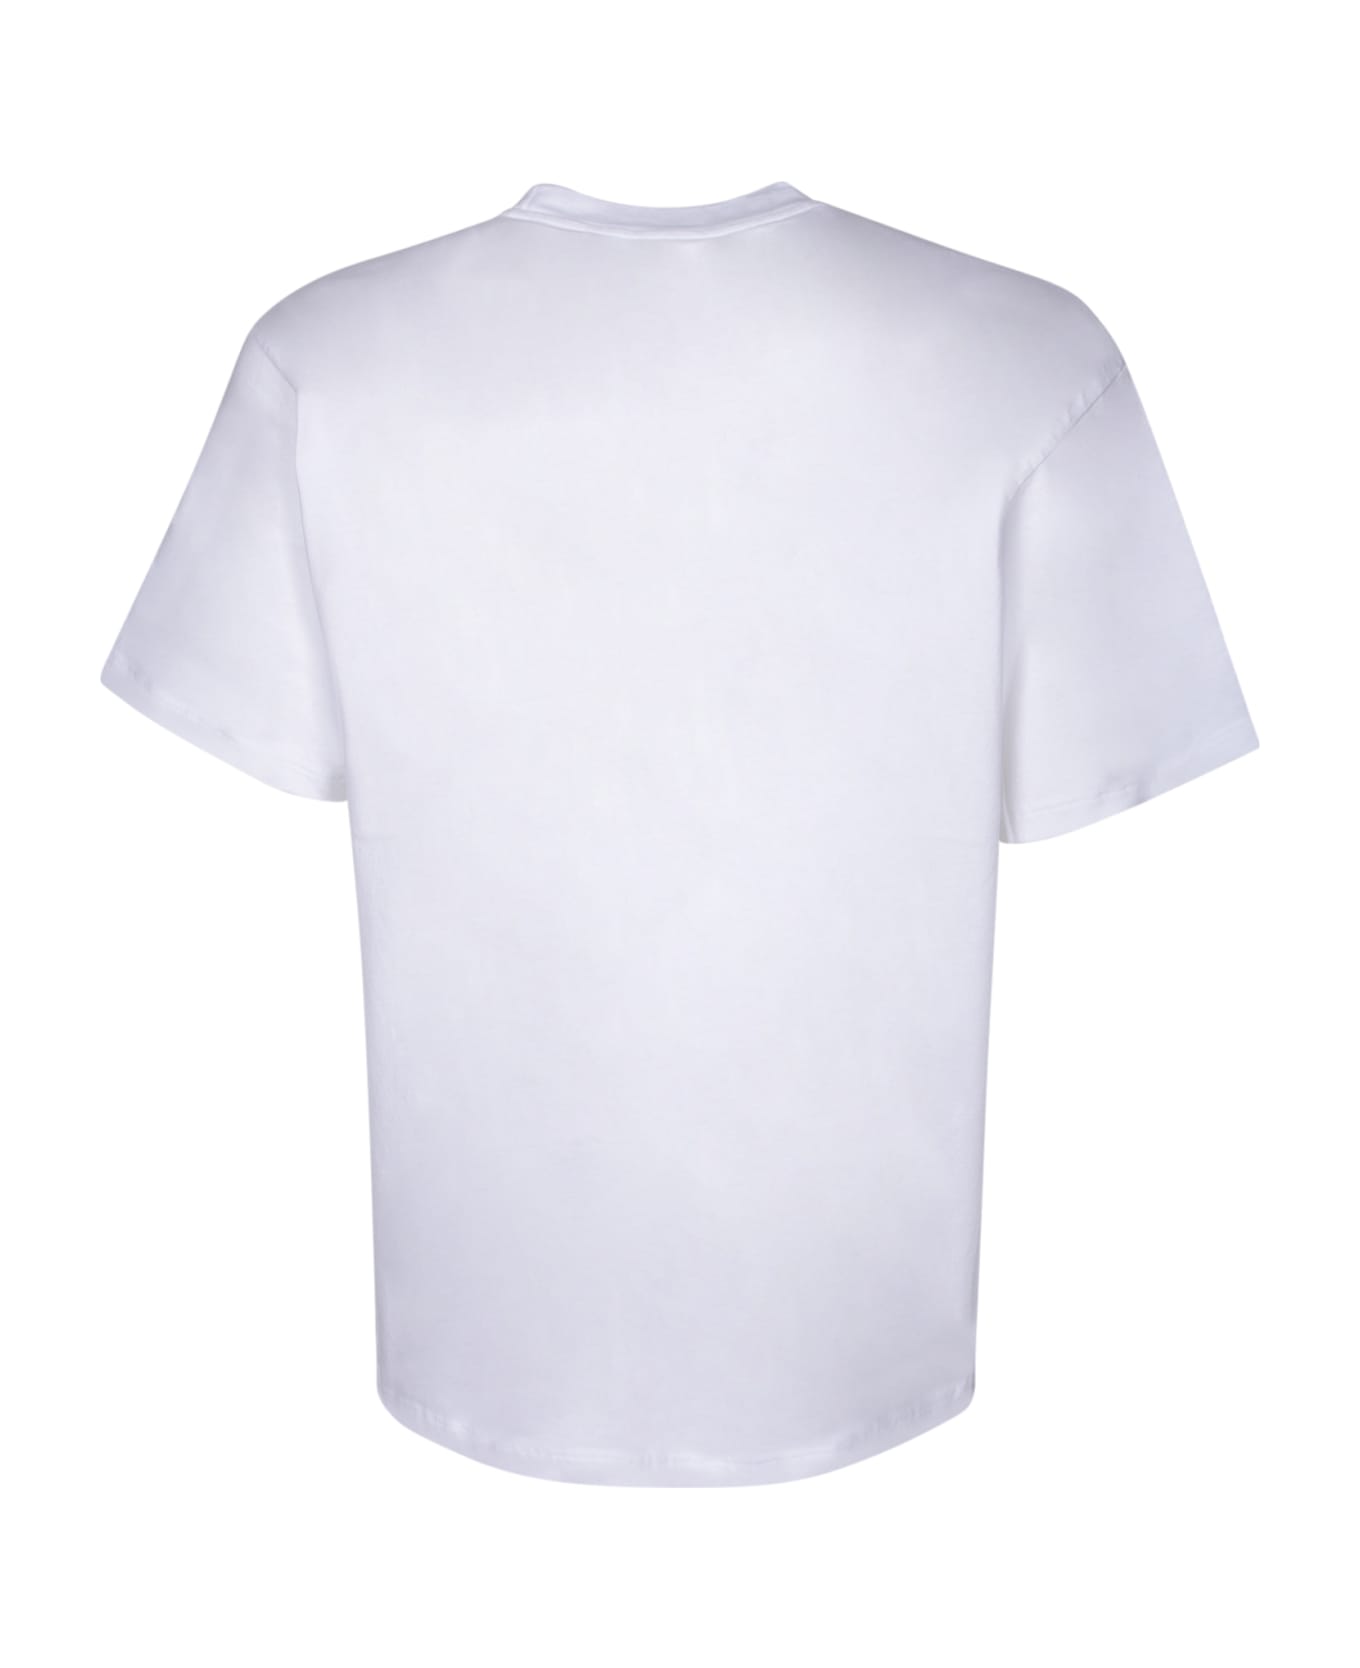 Aries No Problemo T-shirt - White